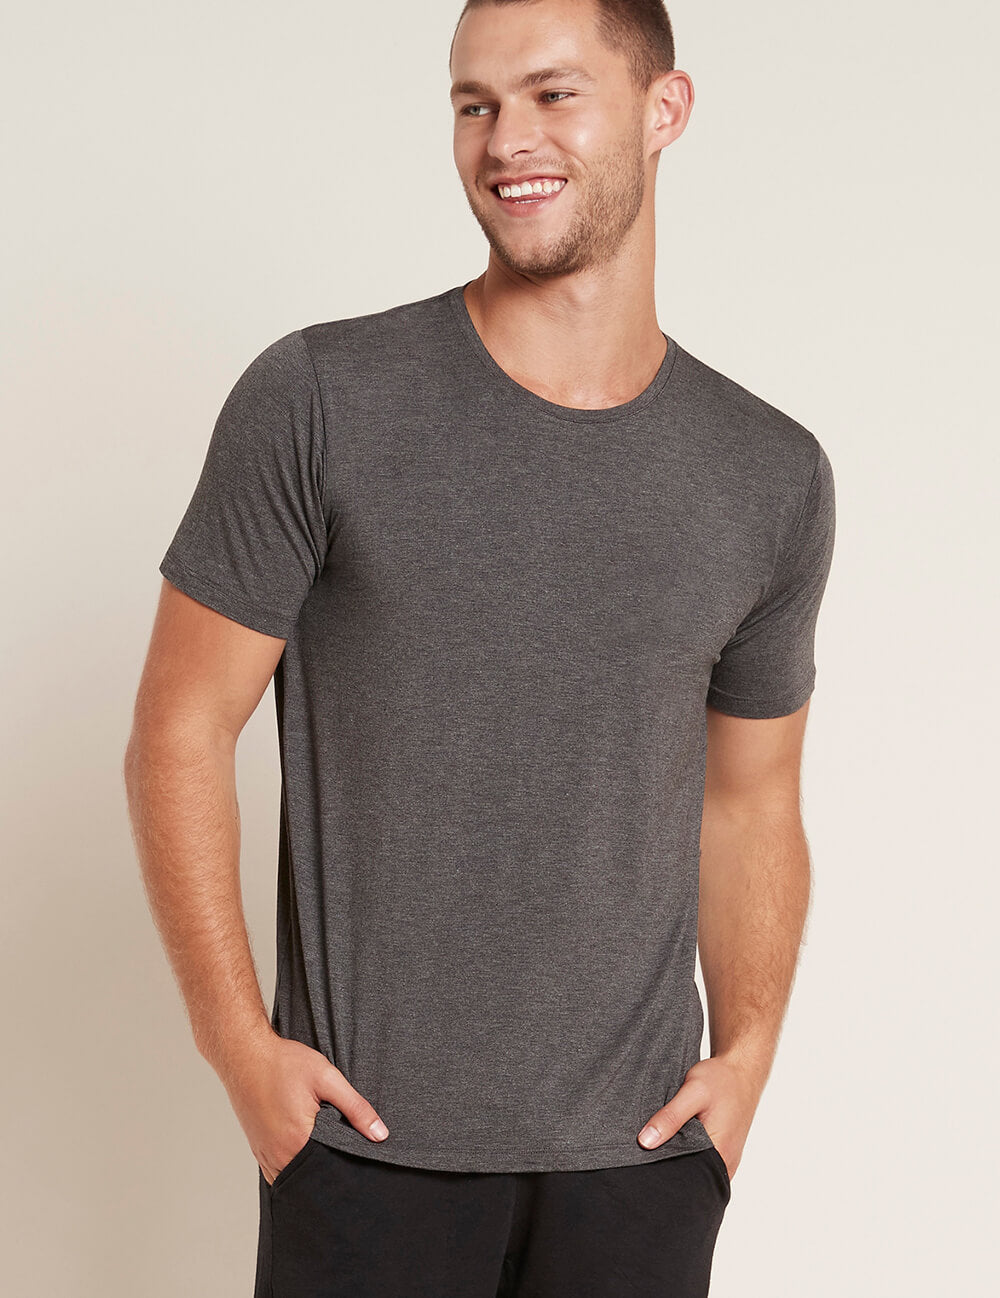 grey t shirt for men